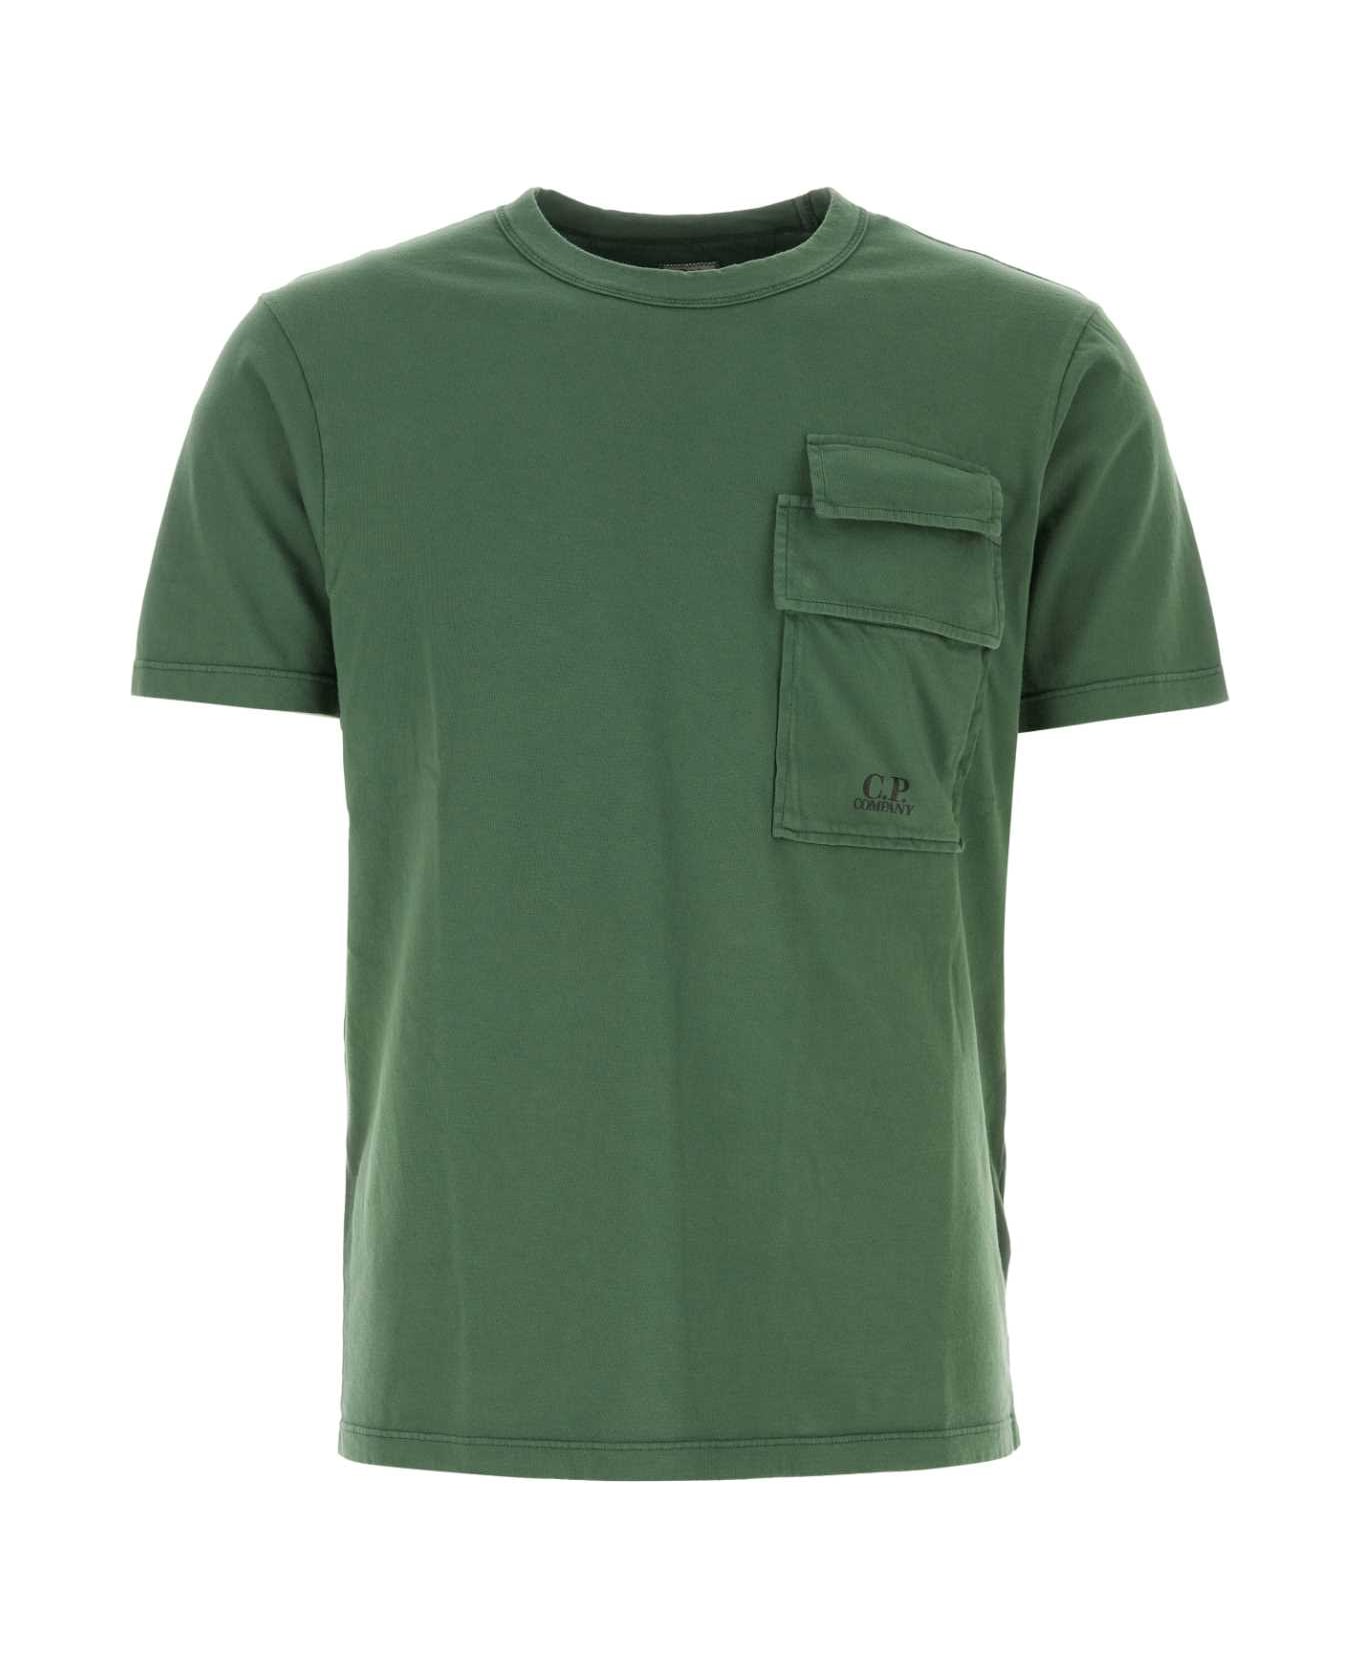 C.P. Company Green Cotton T-shirt - DUCKGREEN